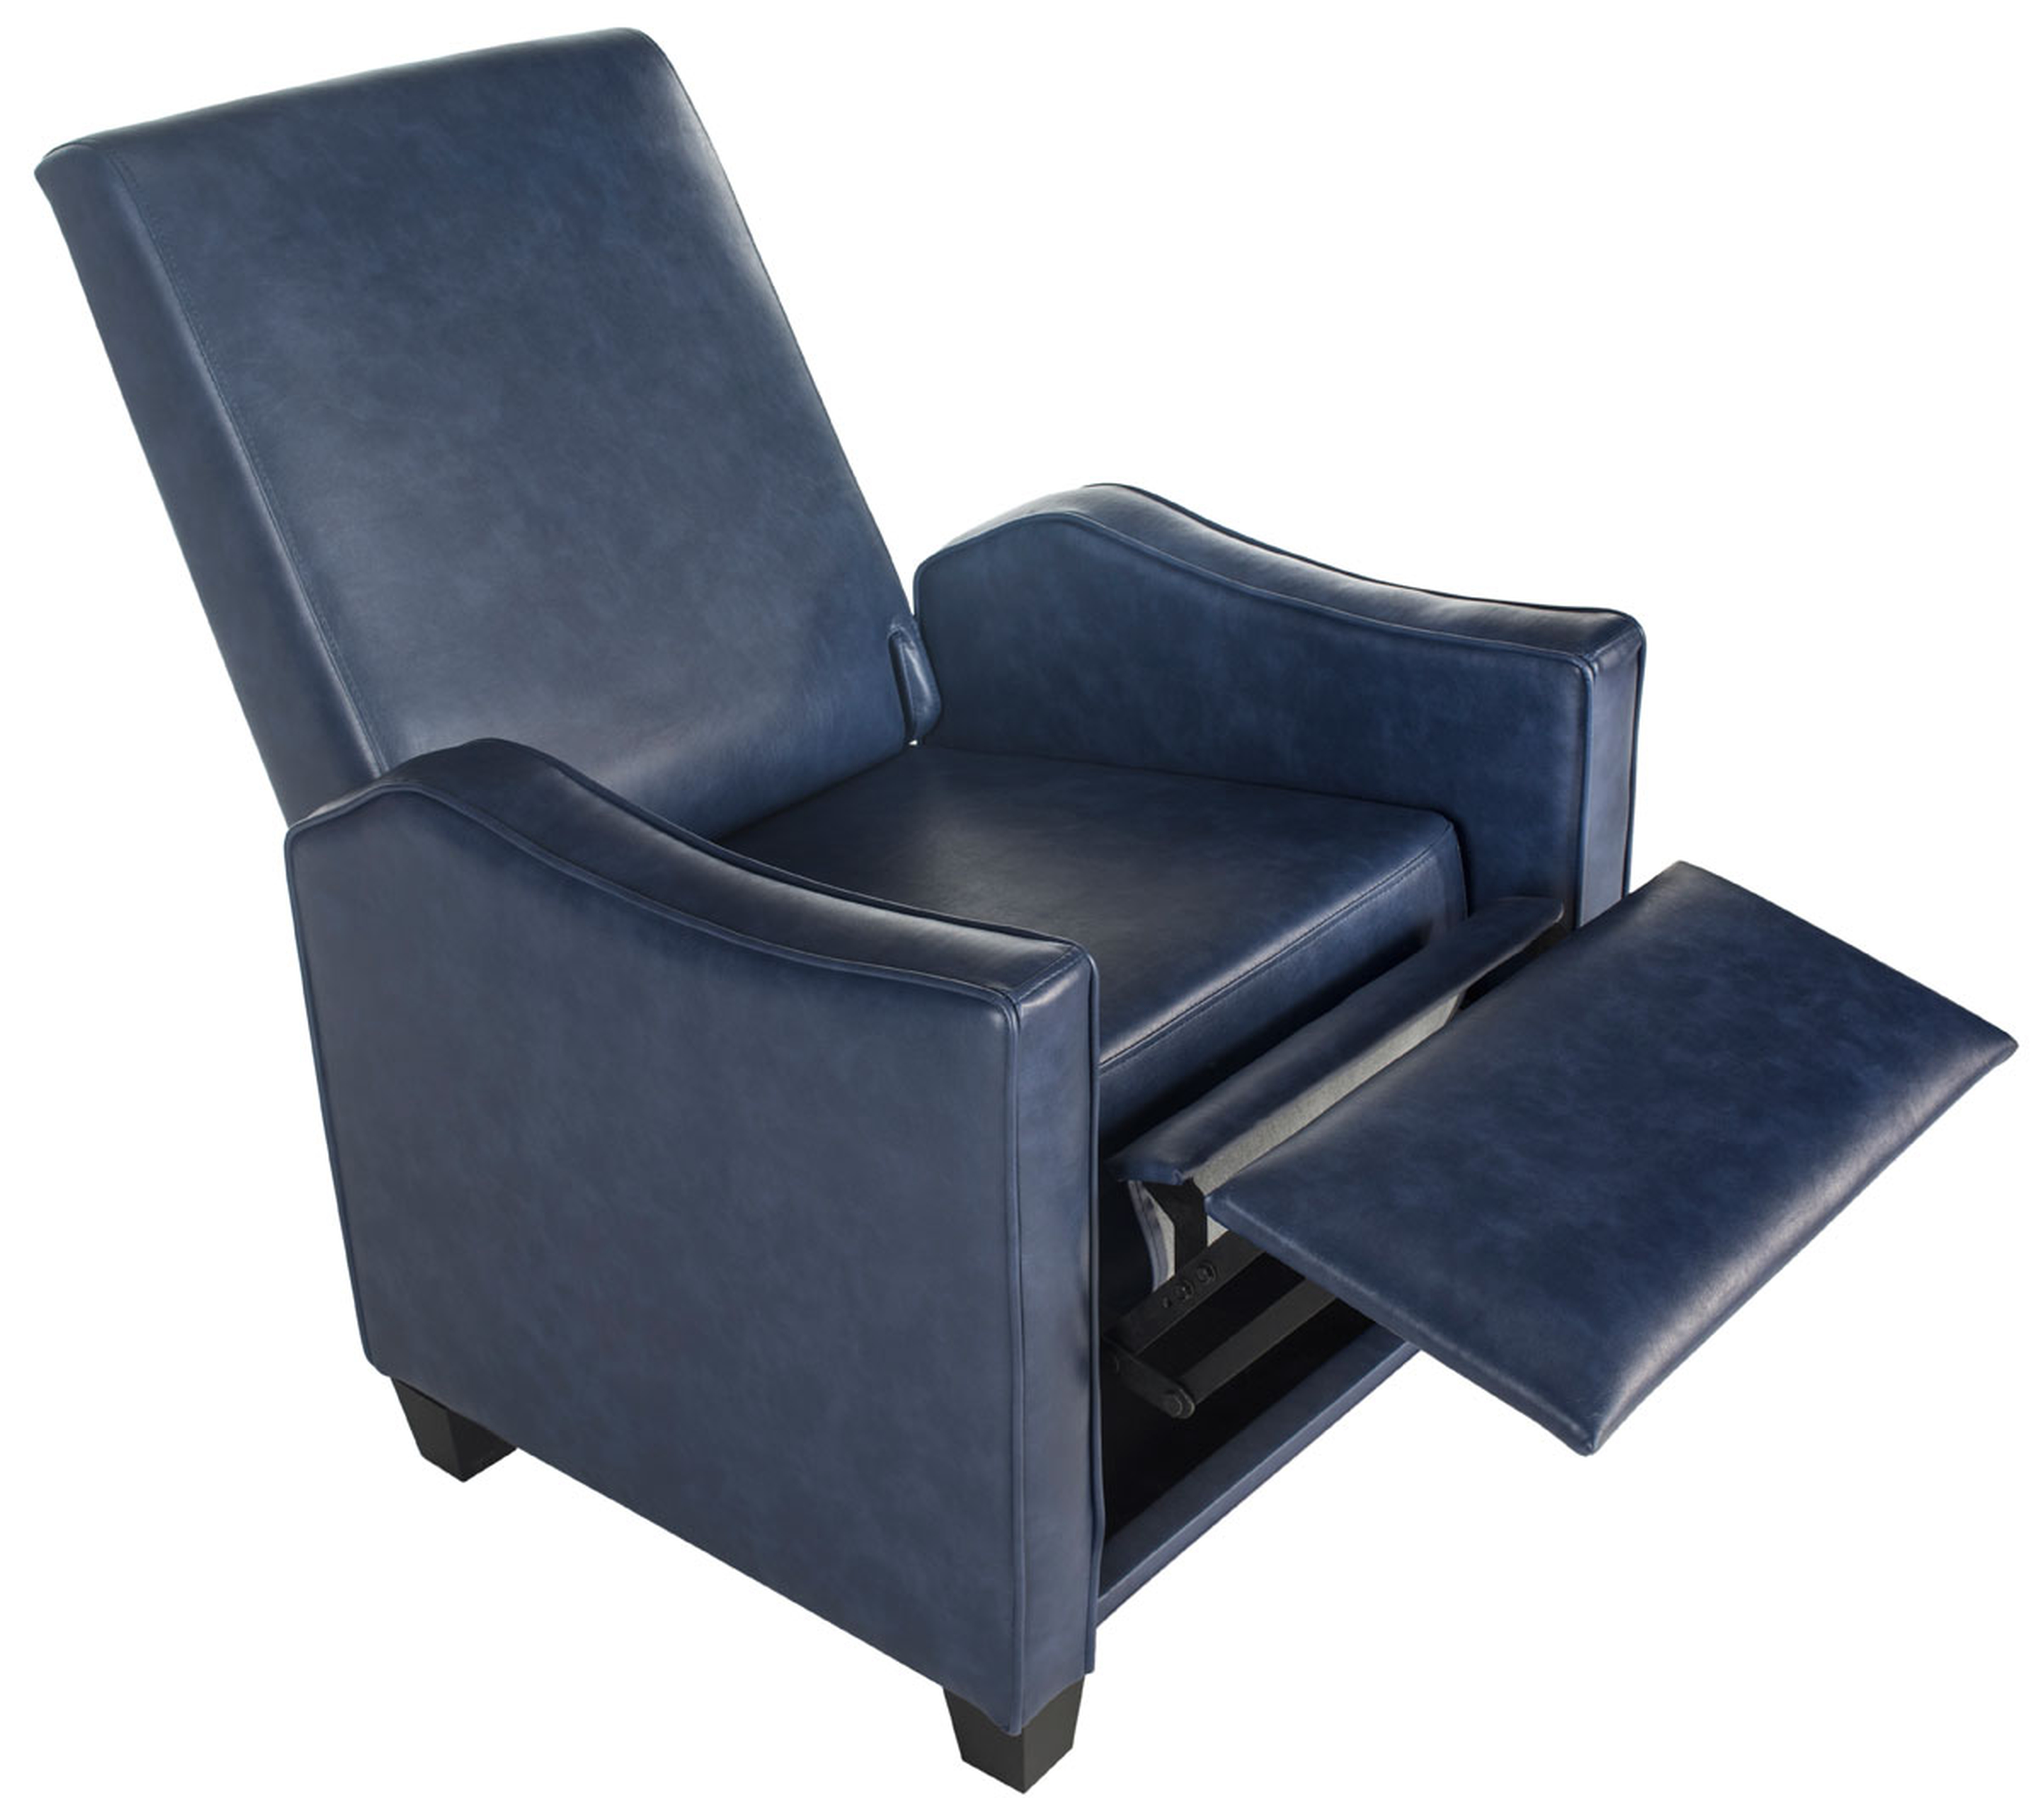 Holden Recliner Chair - Navy/Black - Arlo Home - Arlo Home